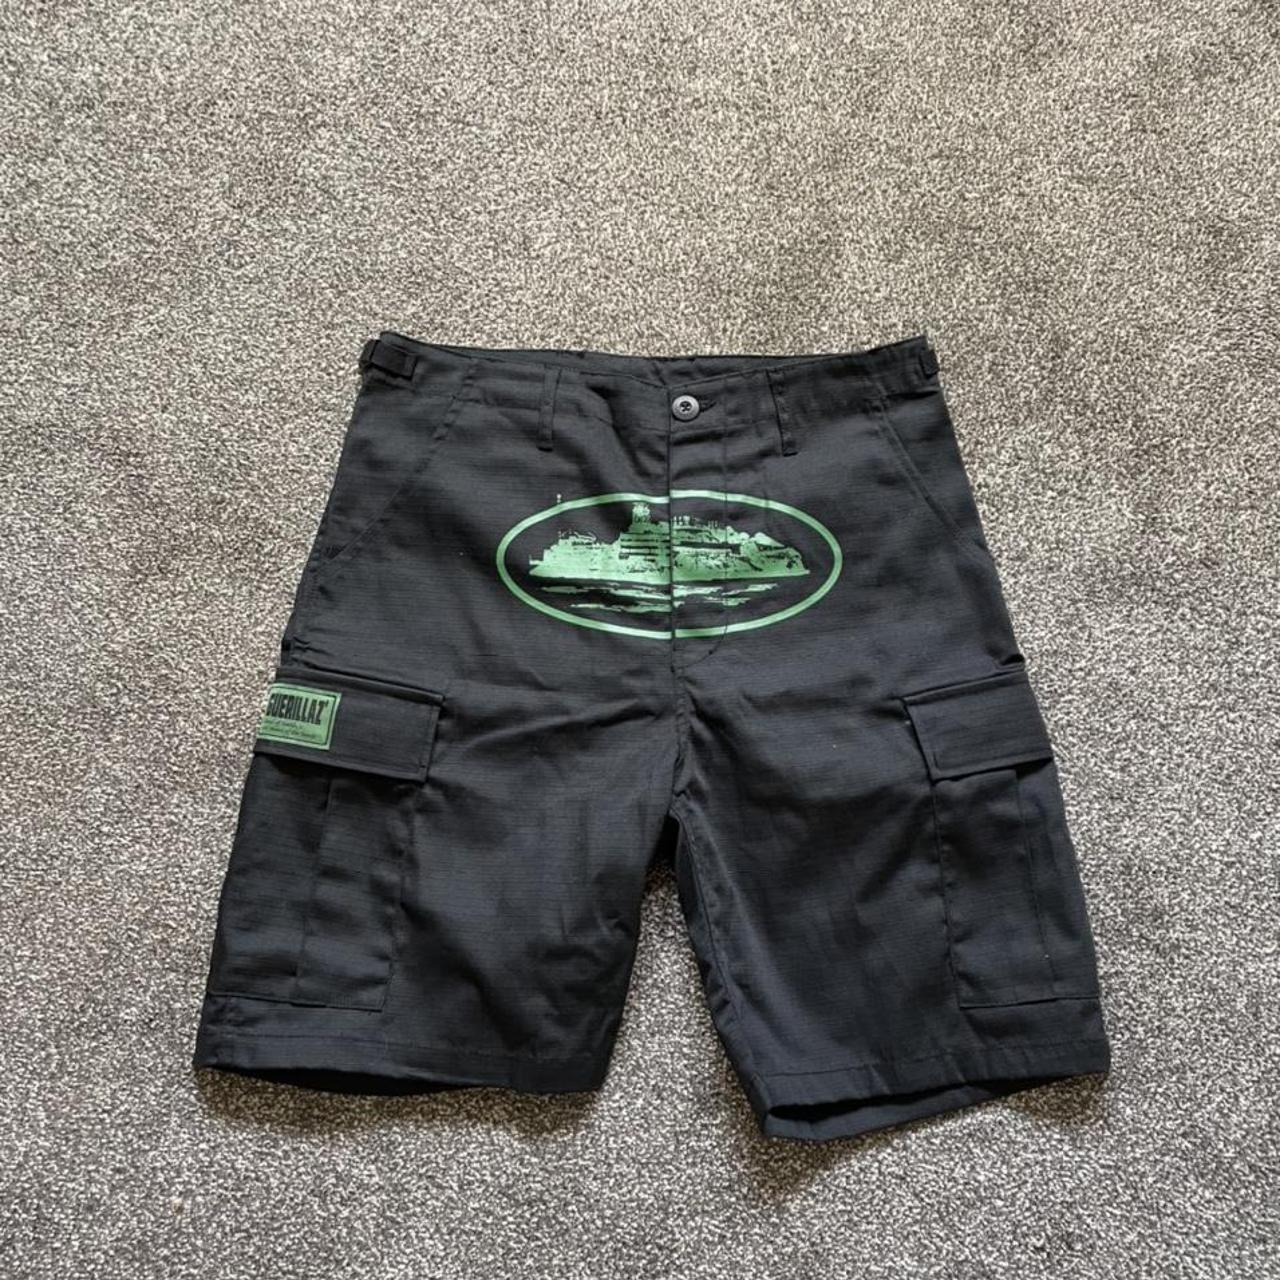 Corteiz Guerillaz Cargo Shorts - Black / Green SMALL... - Depop